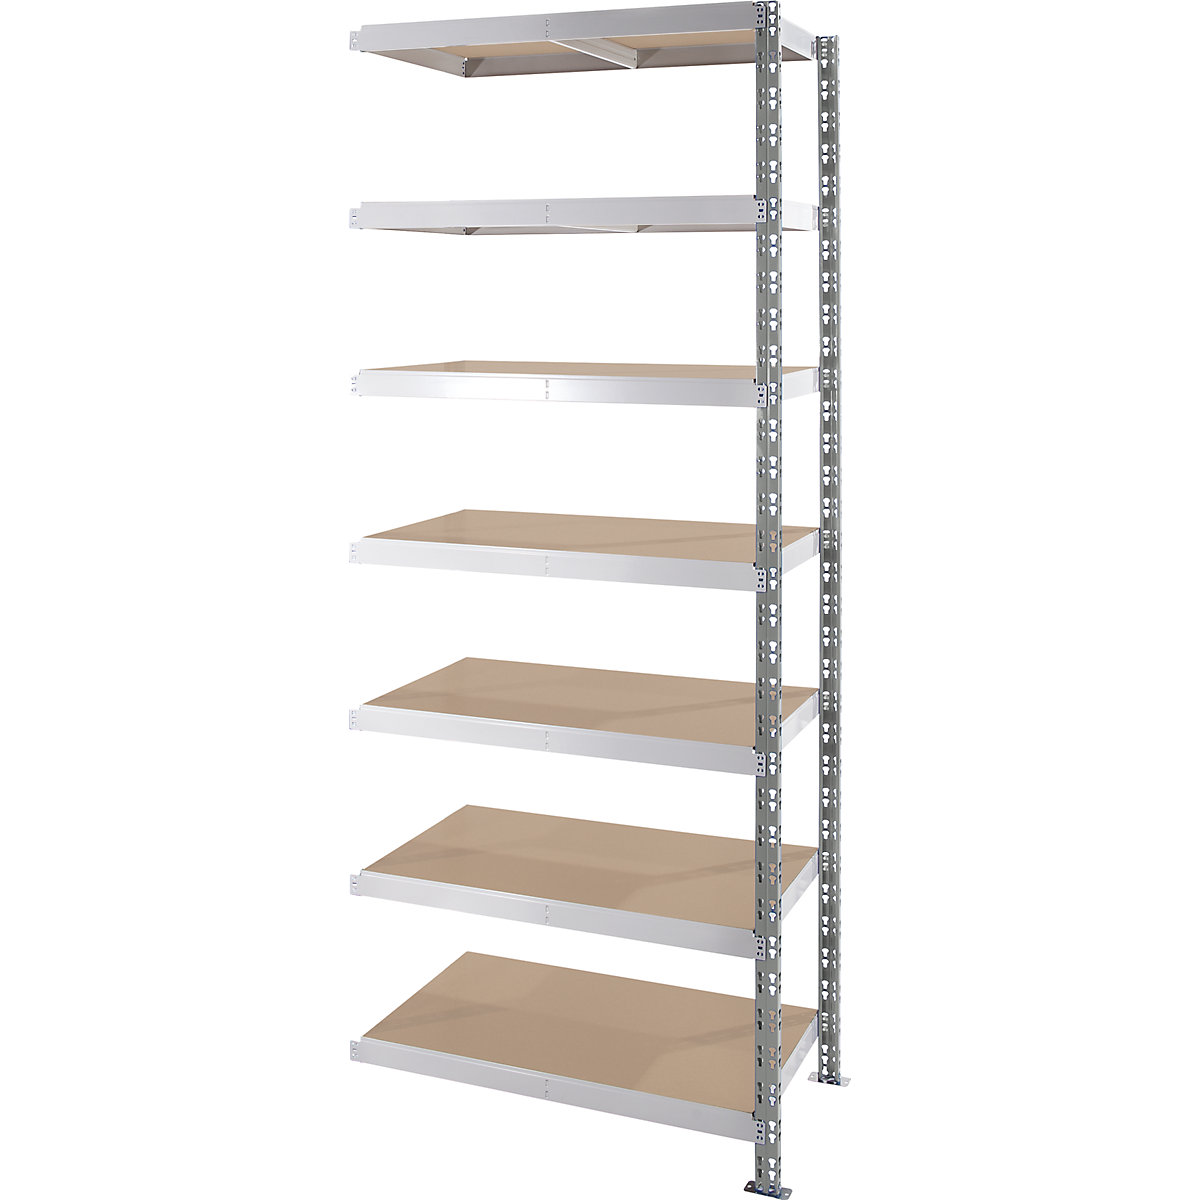 Universal boltless shelving unit, chipboard shelves, HxWxD 2522 x 1025 x 400 mm, extension shelf unit